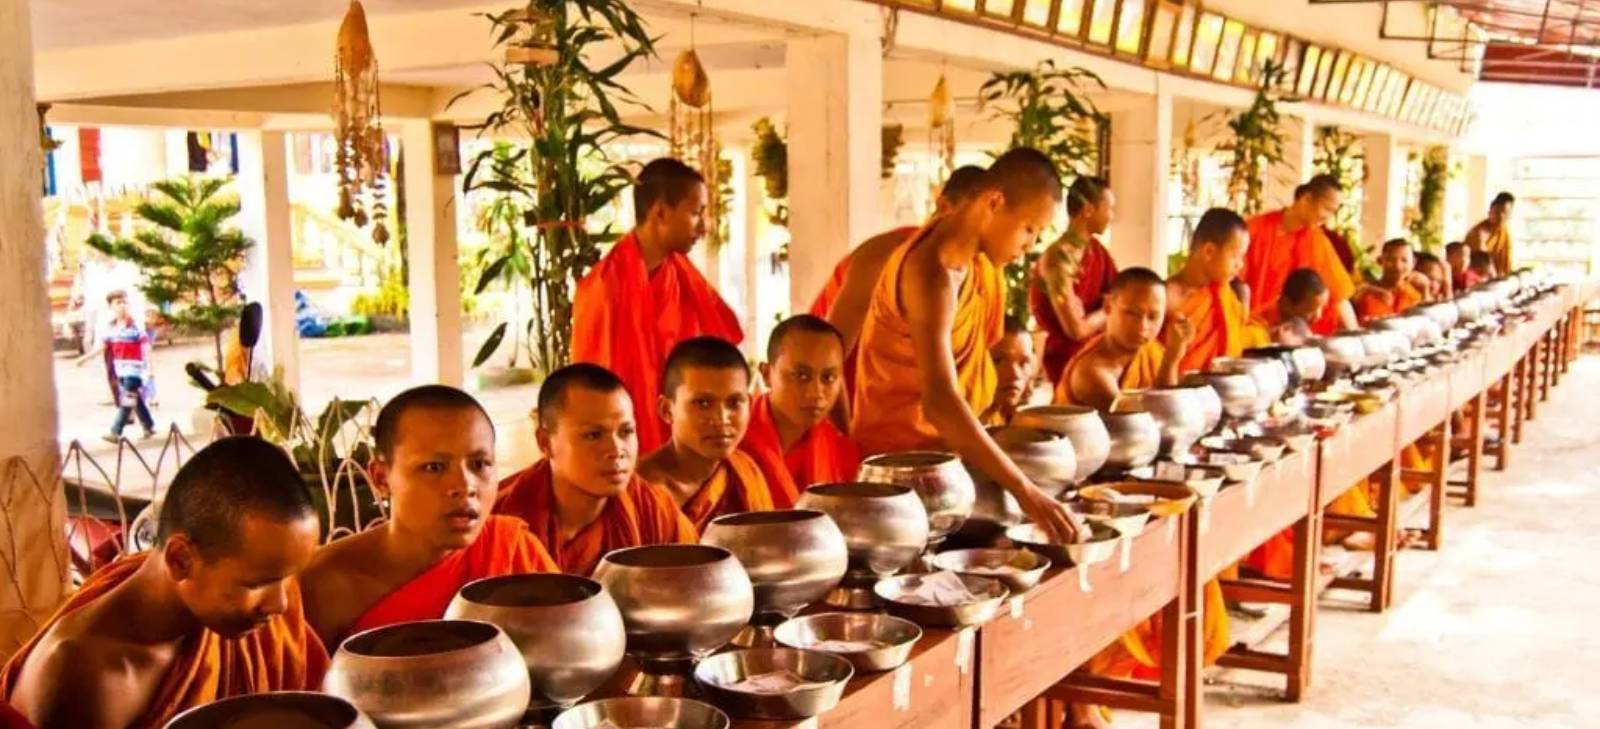 Pchum Ben Festival in Cambodia